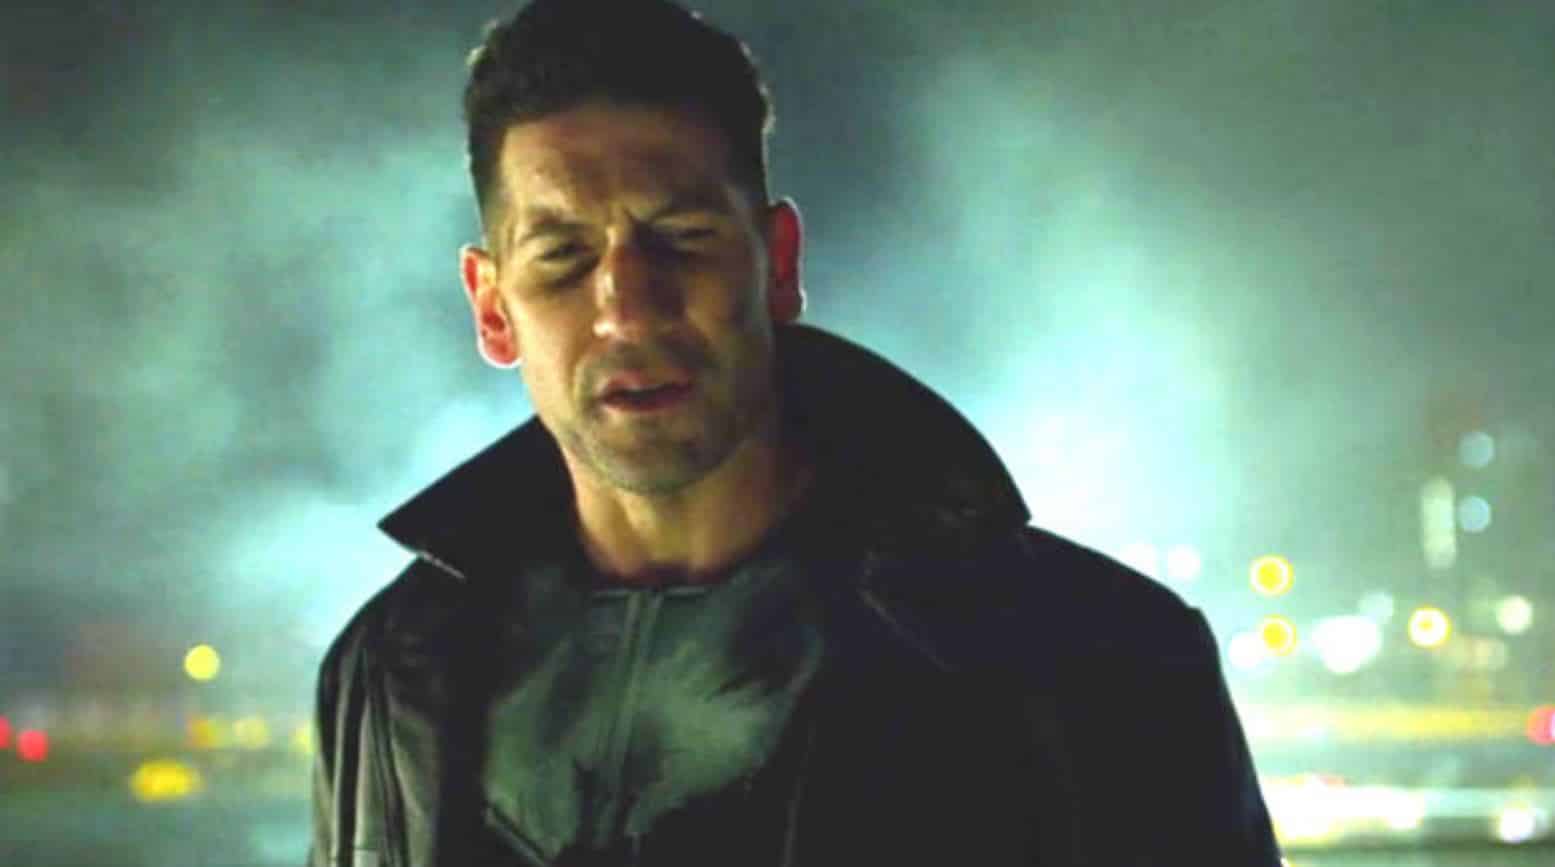 Netflix Plotting 'Punisher' Spinoff Starring Jon Bernthal – The